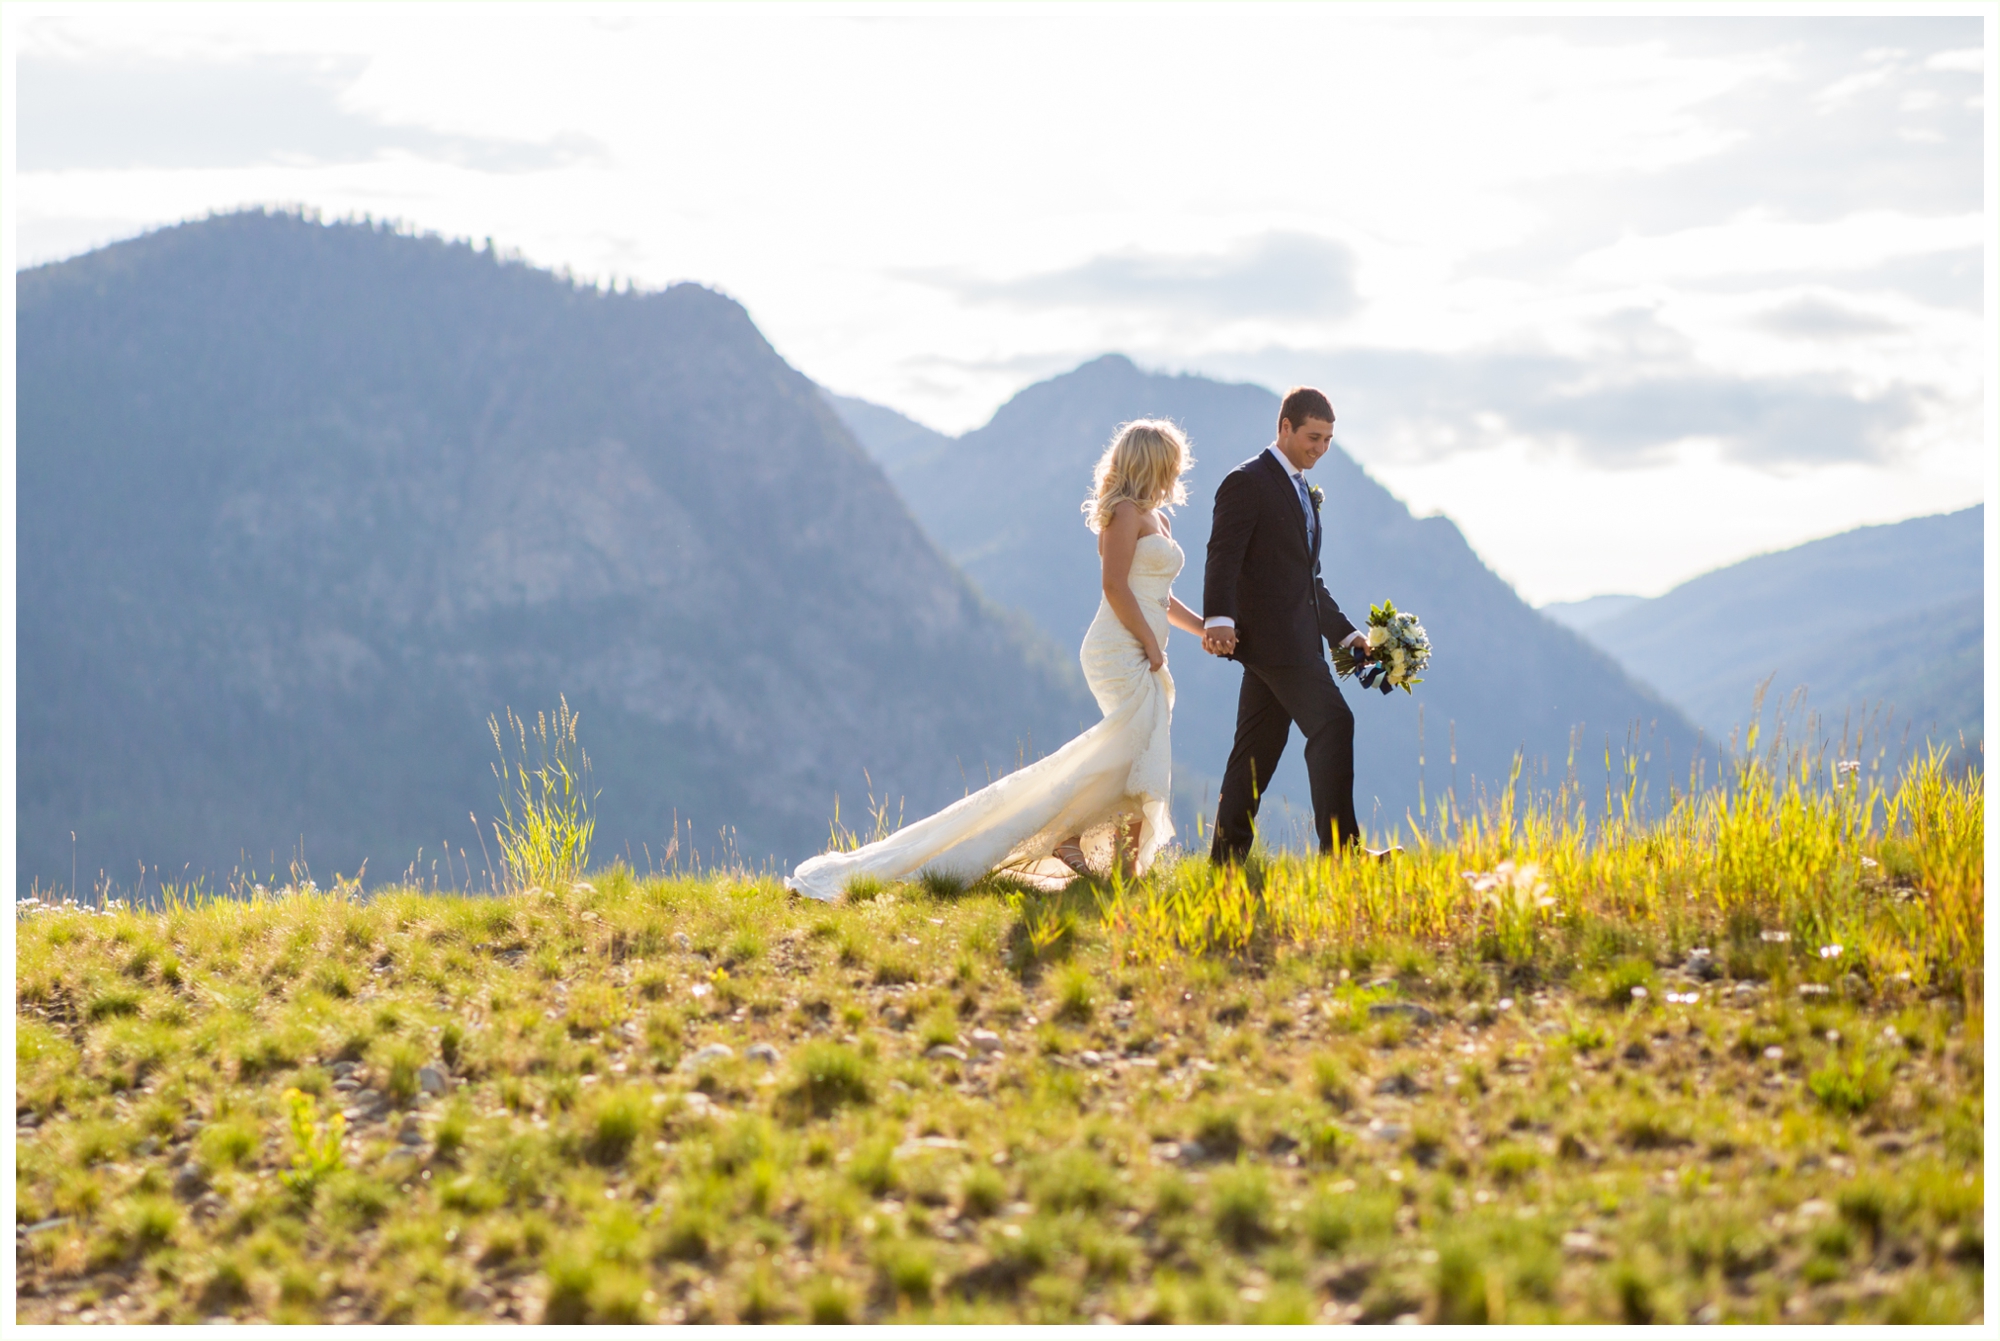 frisco adventure park bride and groom portraits by breckenridge elopement photographer kathryn kim